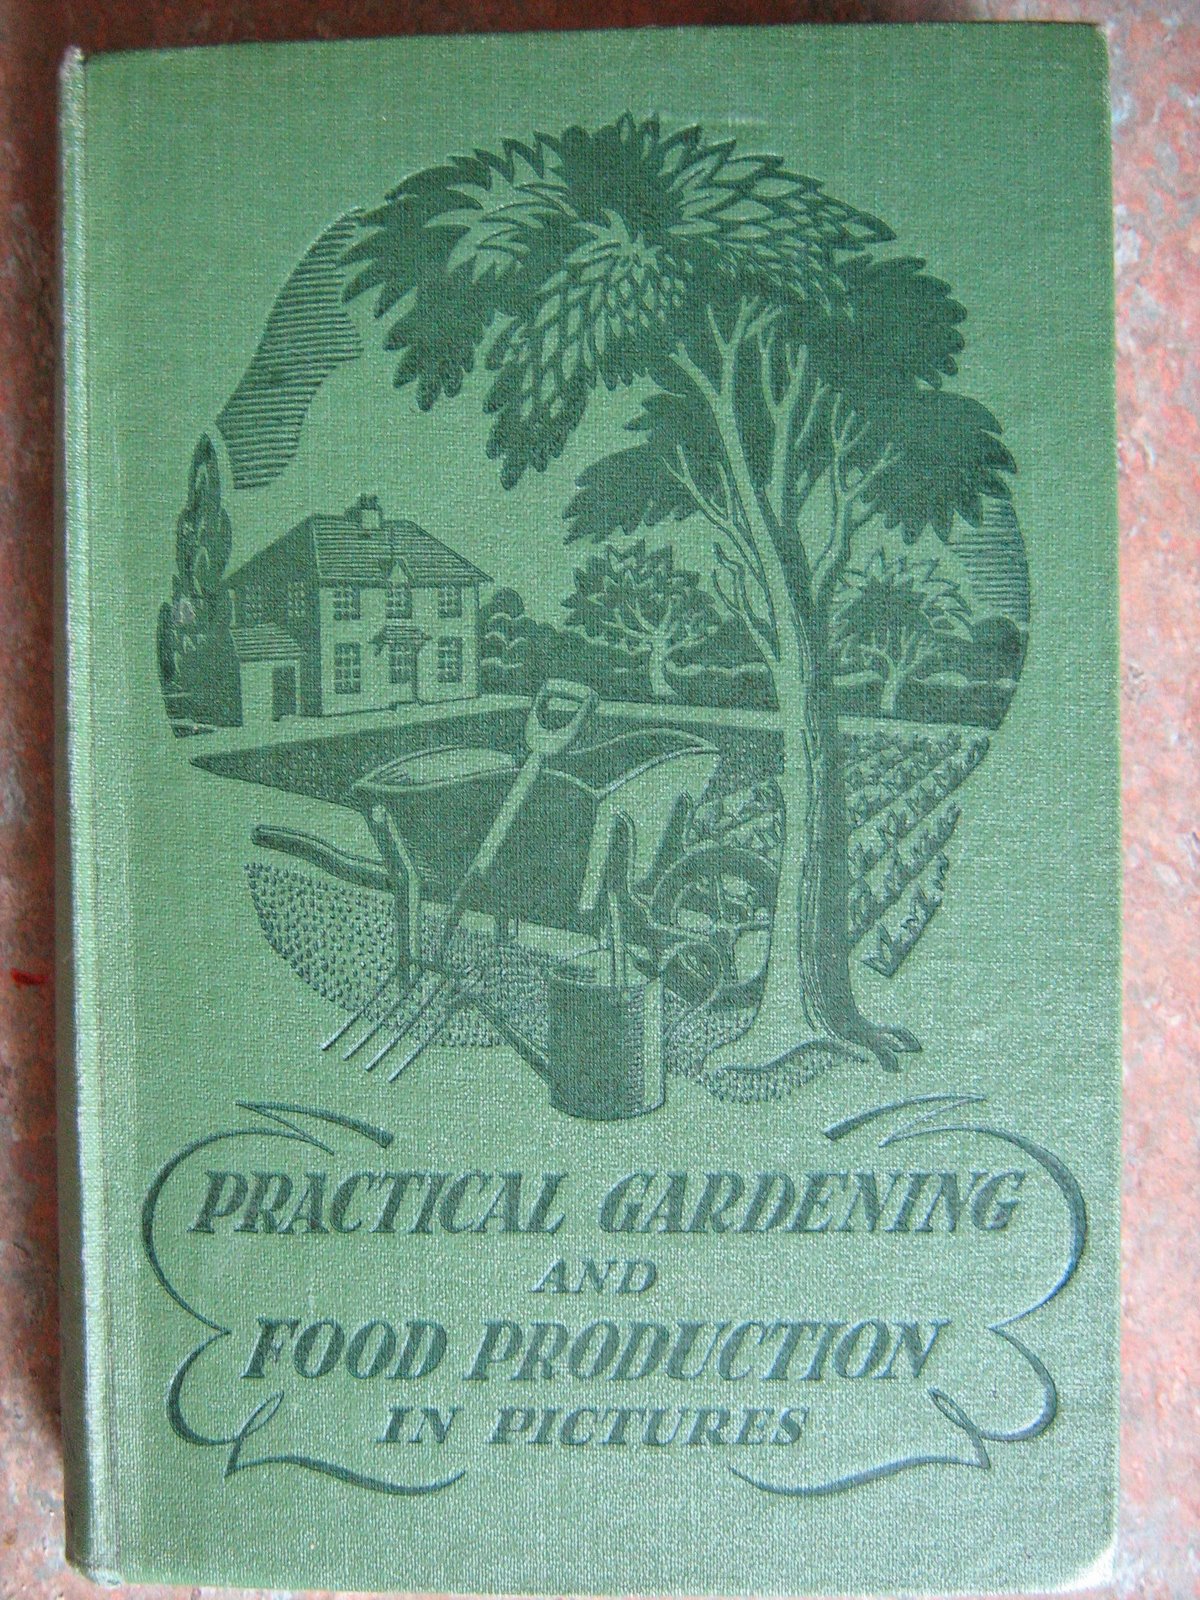 [Practical+Gardening+Cover.jpg]